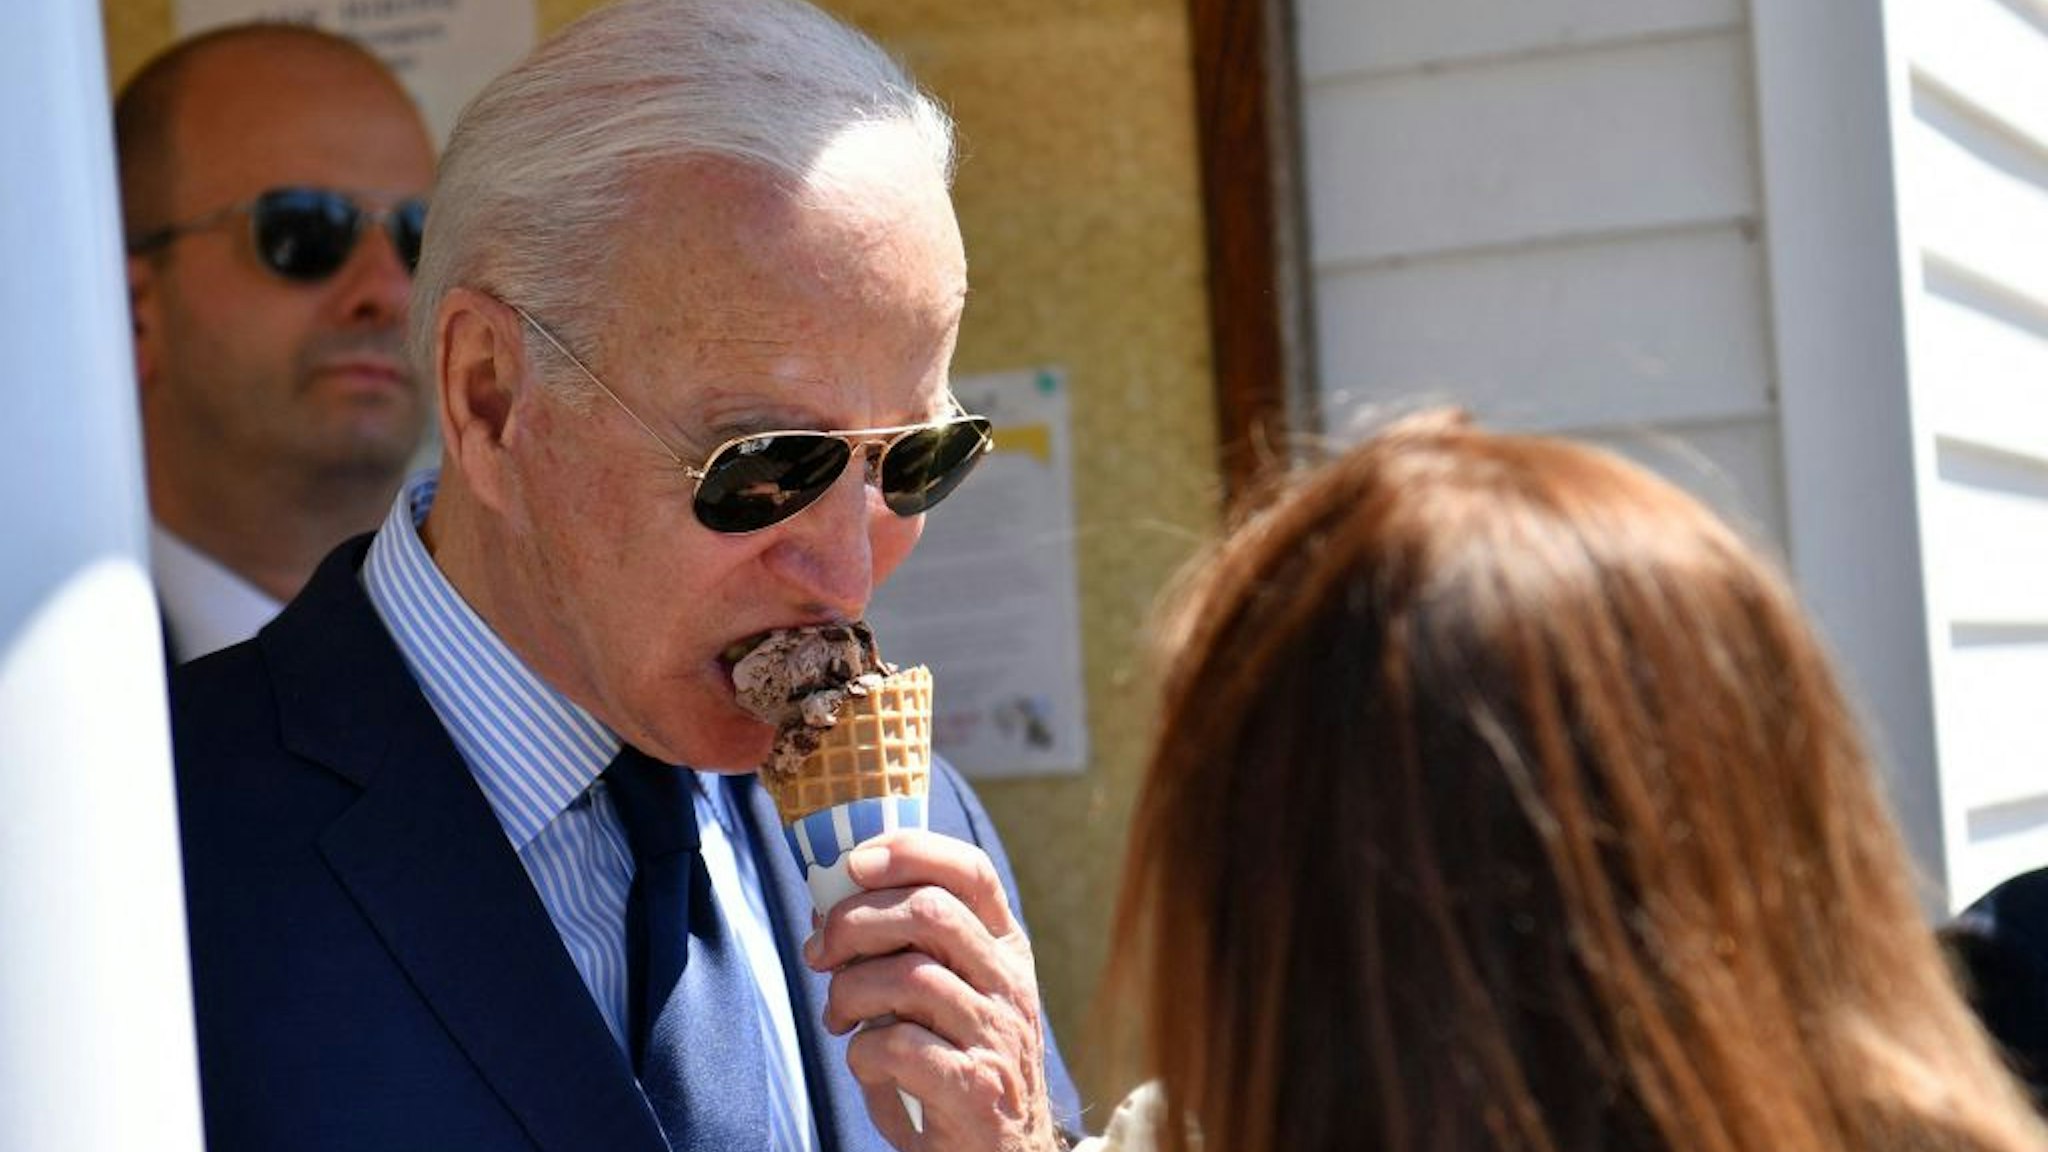 US President Joe Biden eats an ice cream at Honey Hut Ice Cream in Cleveland, Ohio, on May 27, 2021. (Photo by Nicholas Kamm / AFP) (Photo by NICHOLAS KAMM/AFP via Getty Images)